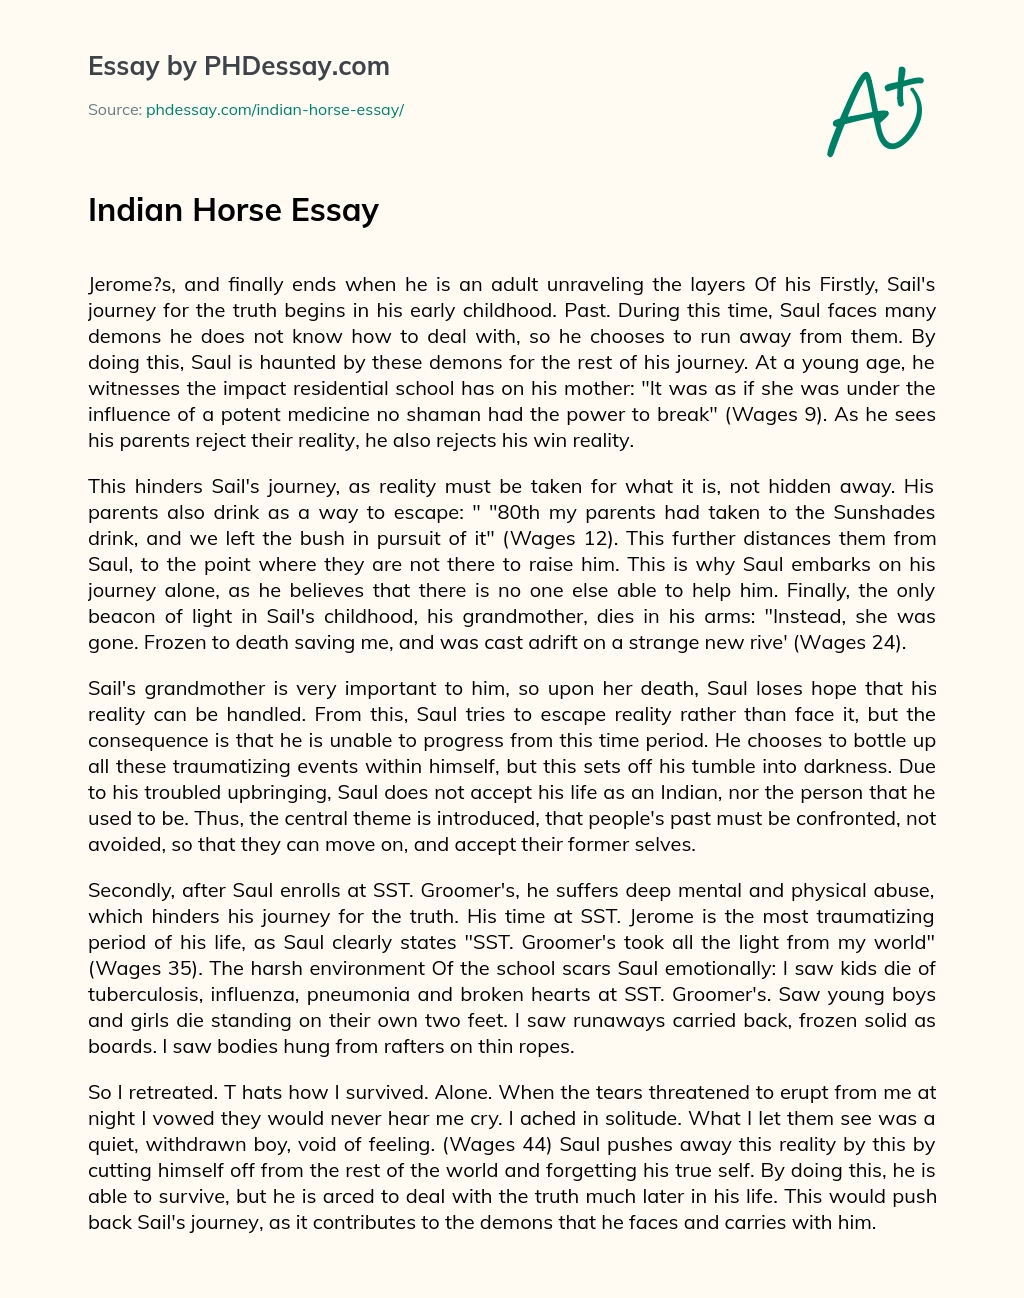 Indian Horse Essay essay